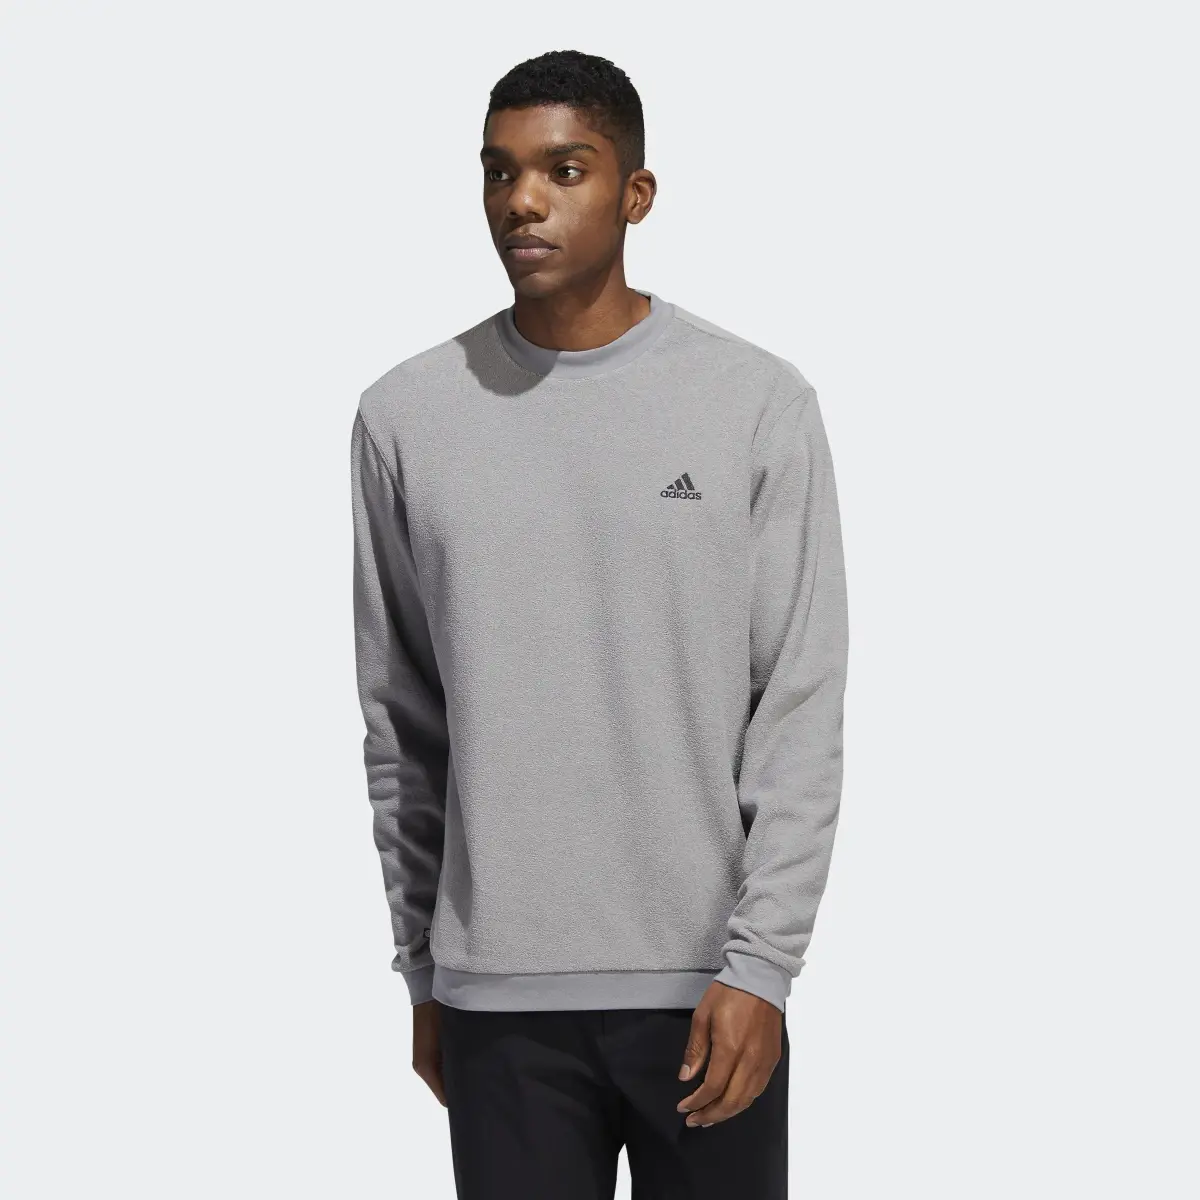 Adidas Core Crew Sweatshirt. 2